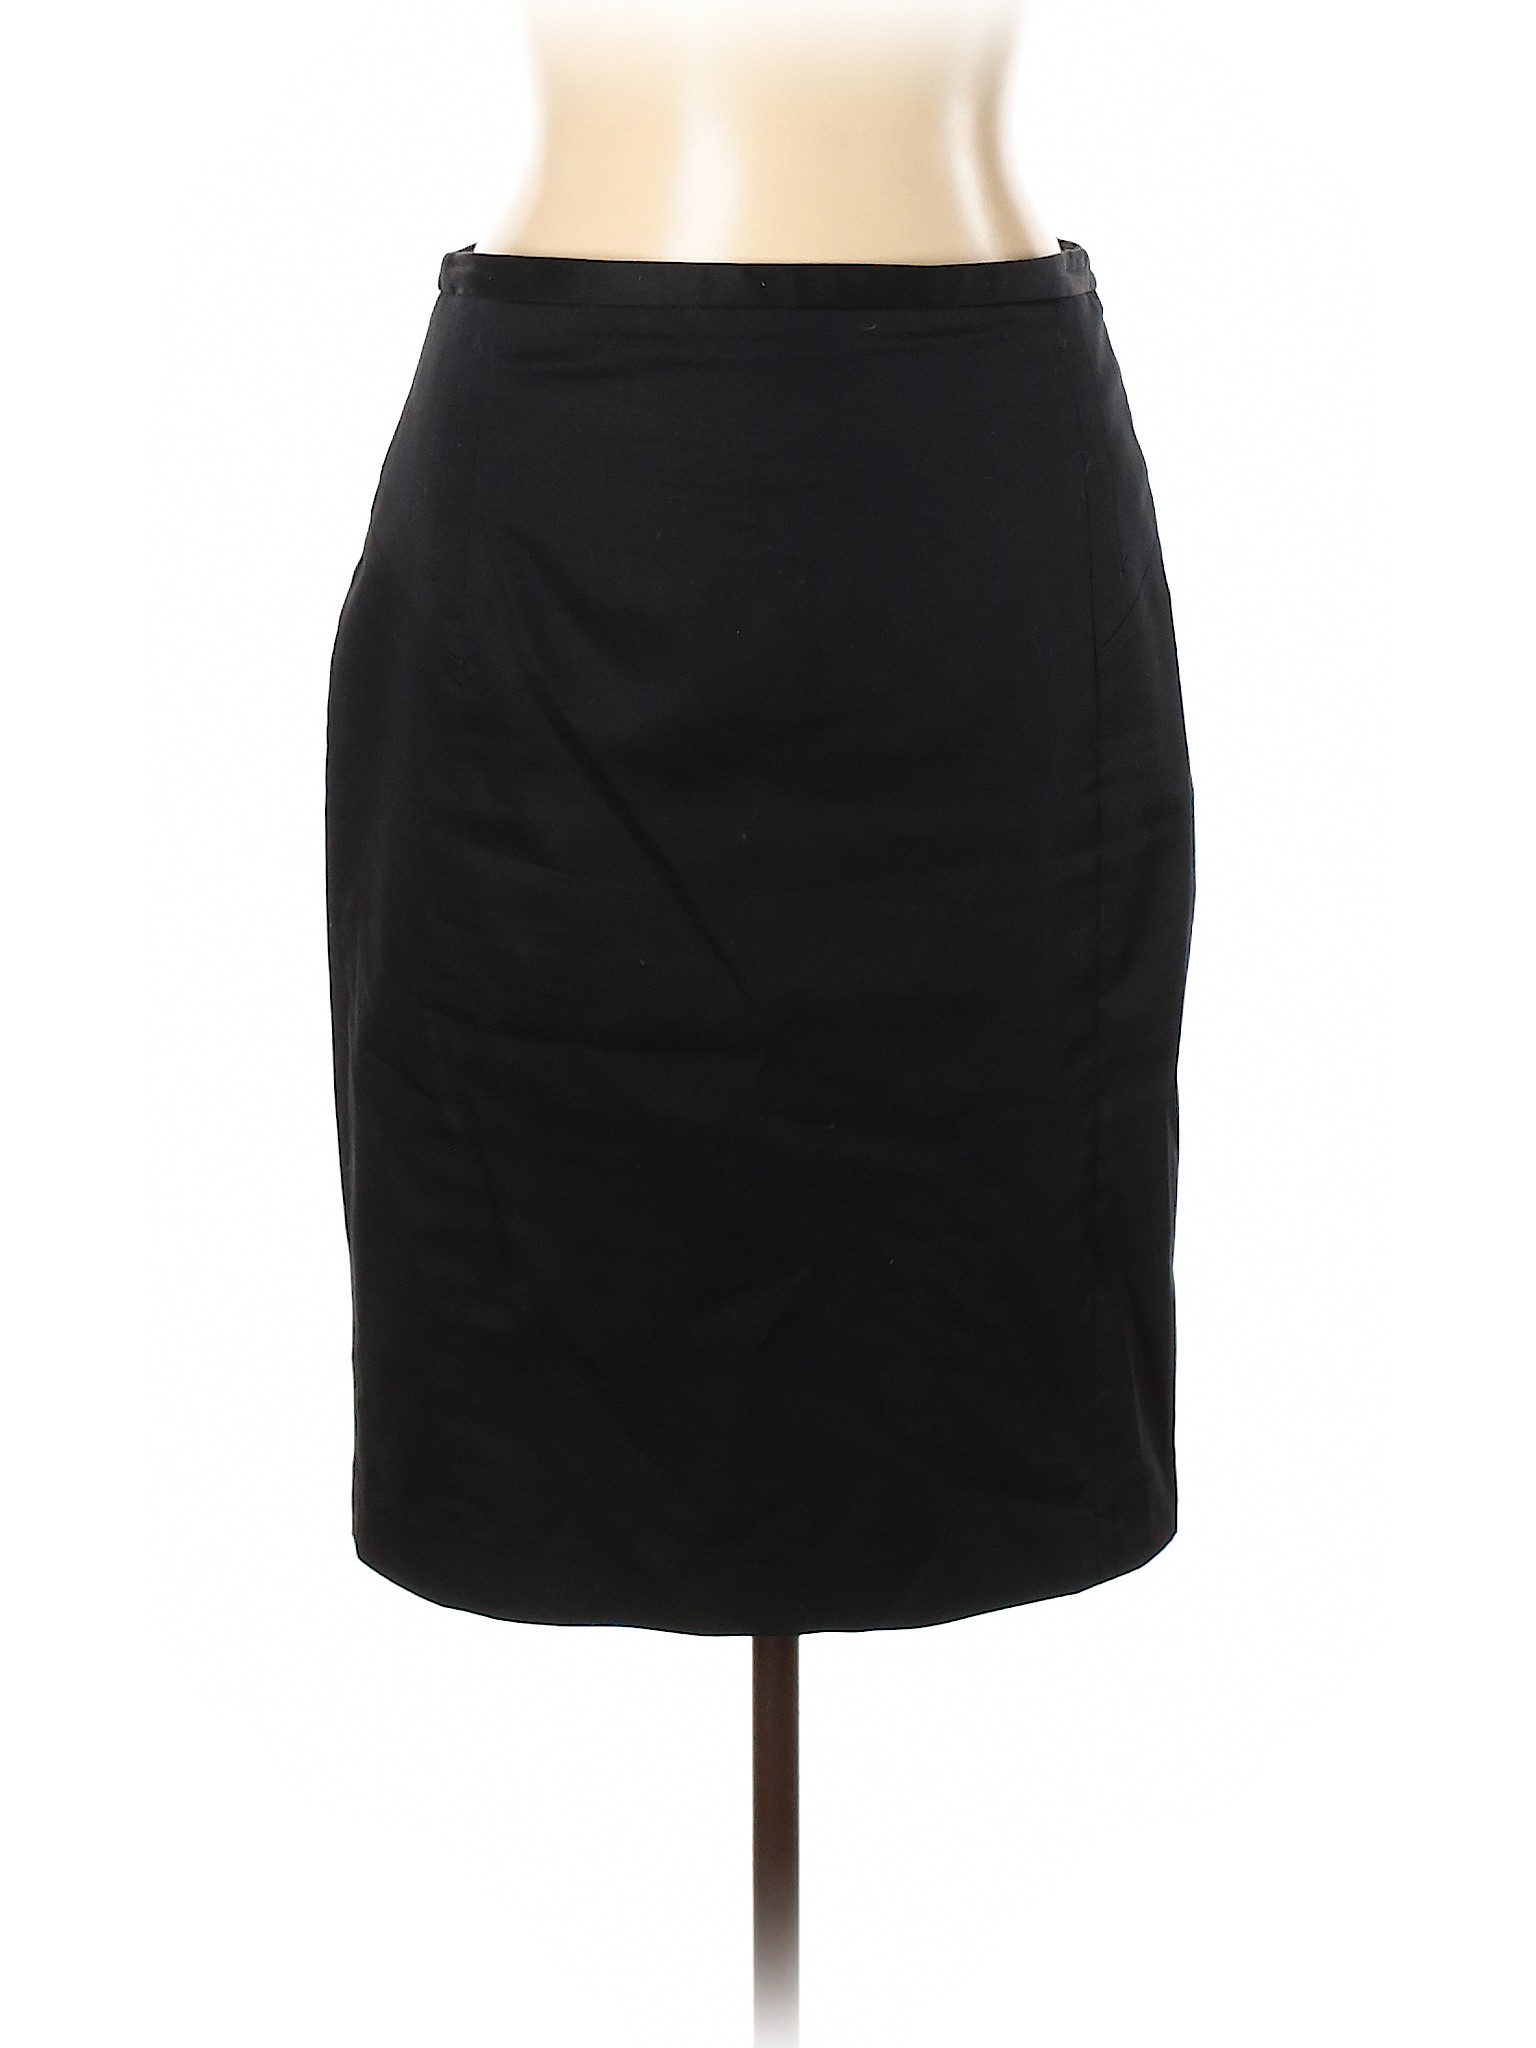 Express Design Studio Women Black Casual Skirt 10 | eBay